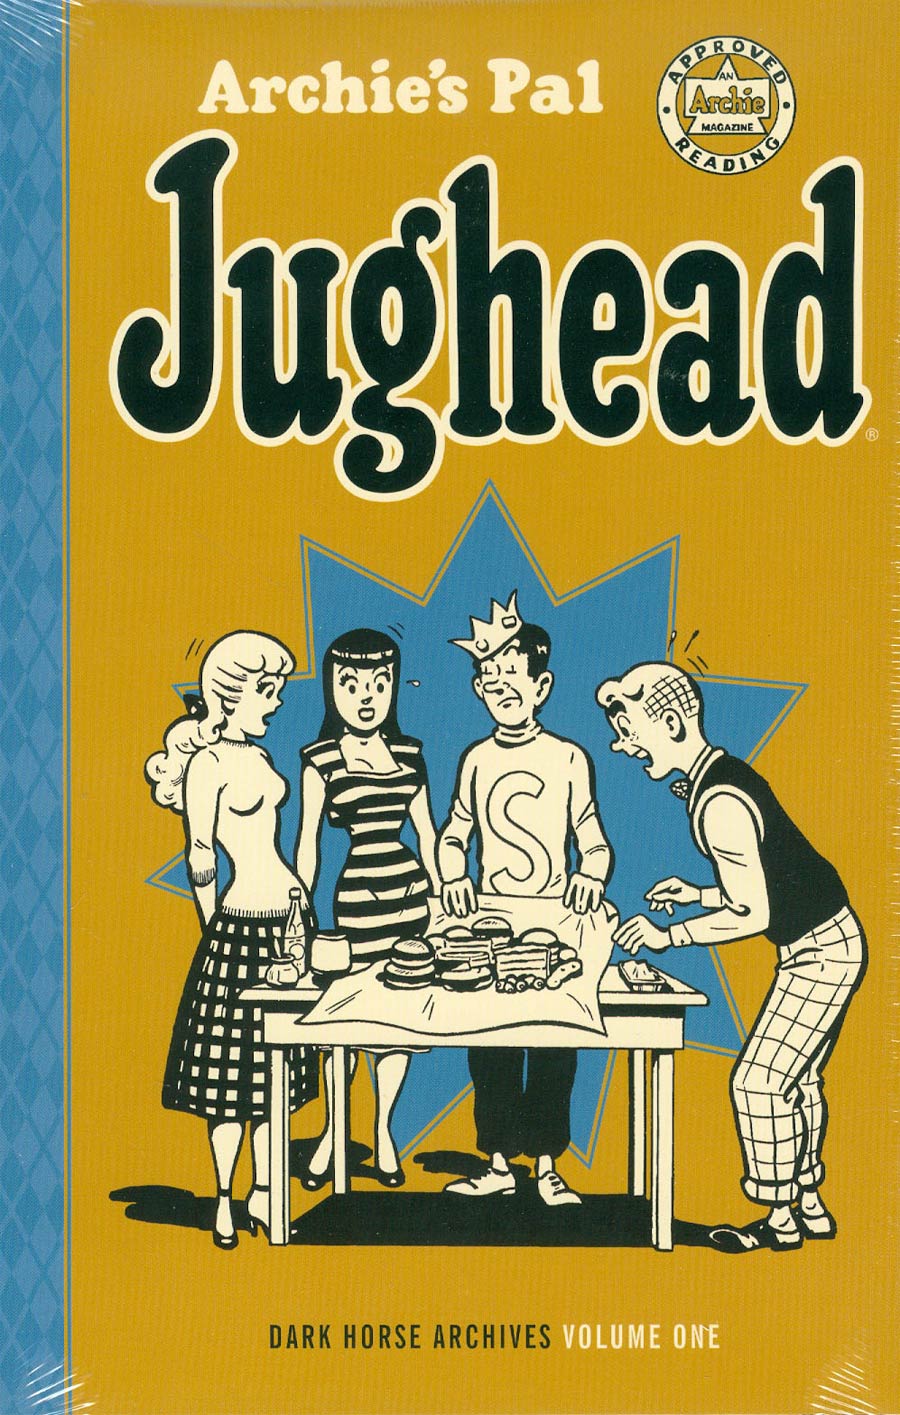 Archies Pal Jughead Archives Vol 1 HC